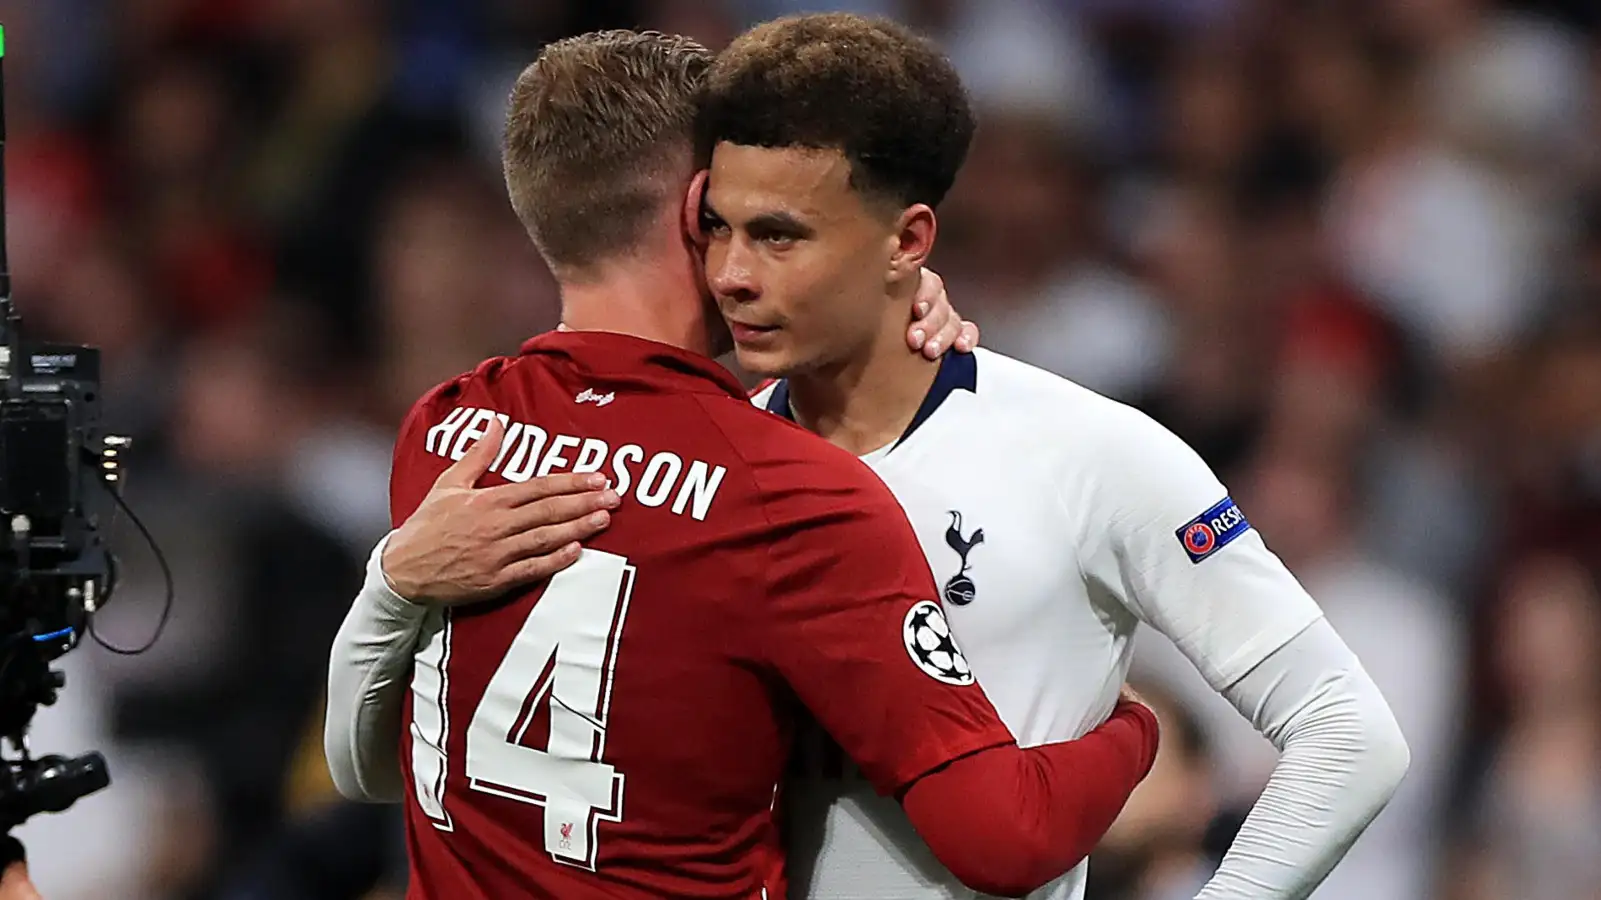 Liverpool midfielder Jordan Henderson hugs Tottenham's Dele Alli after the 2019 Champions League final.